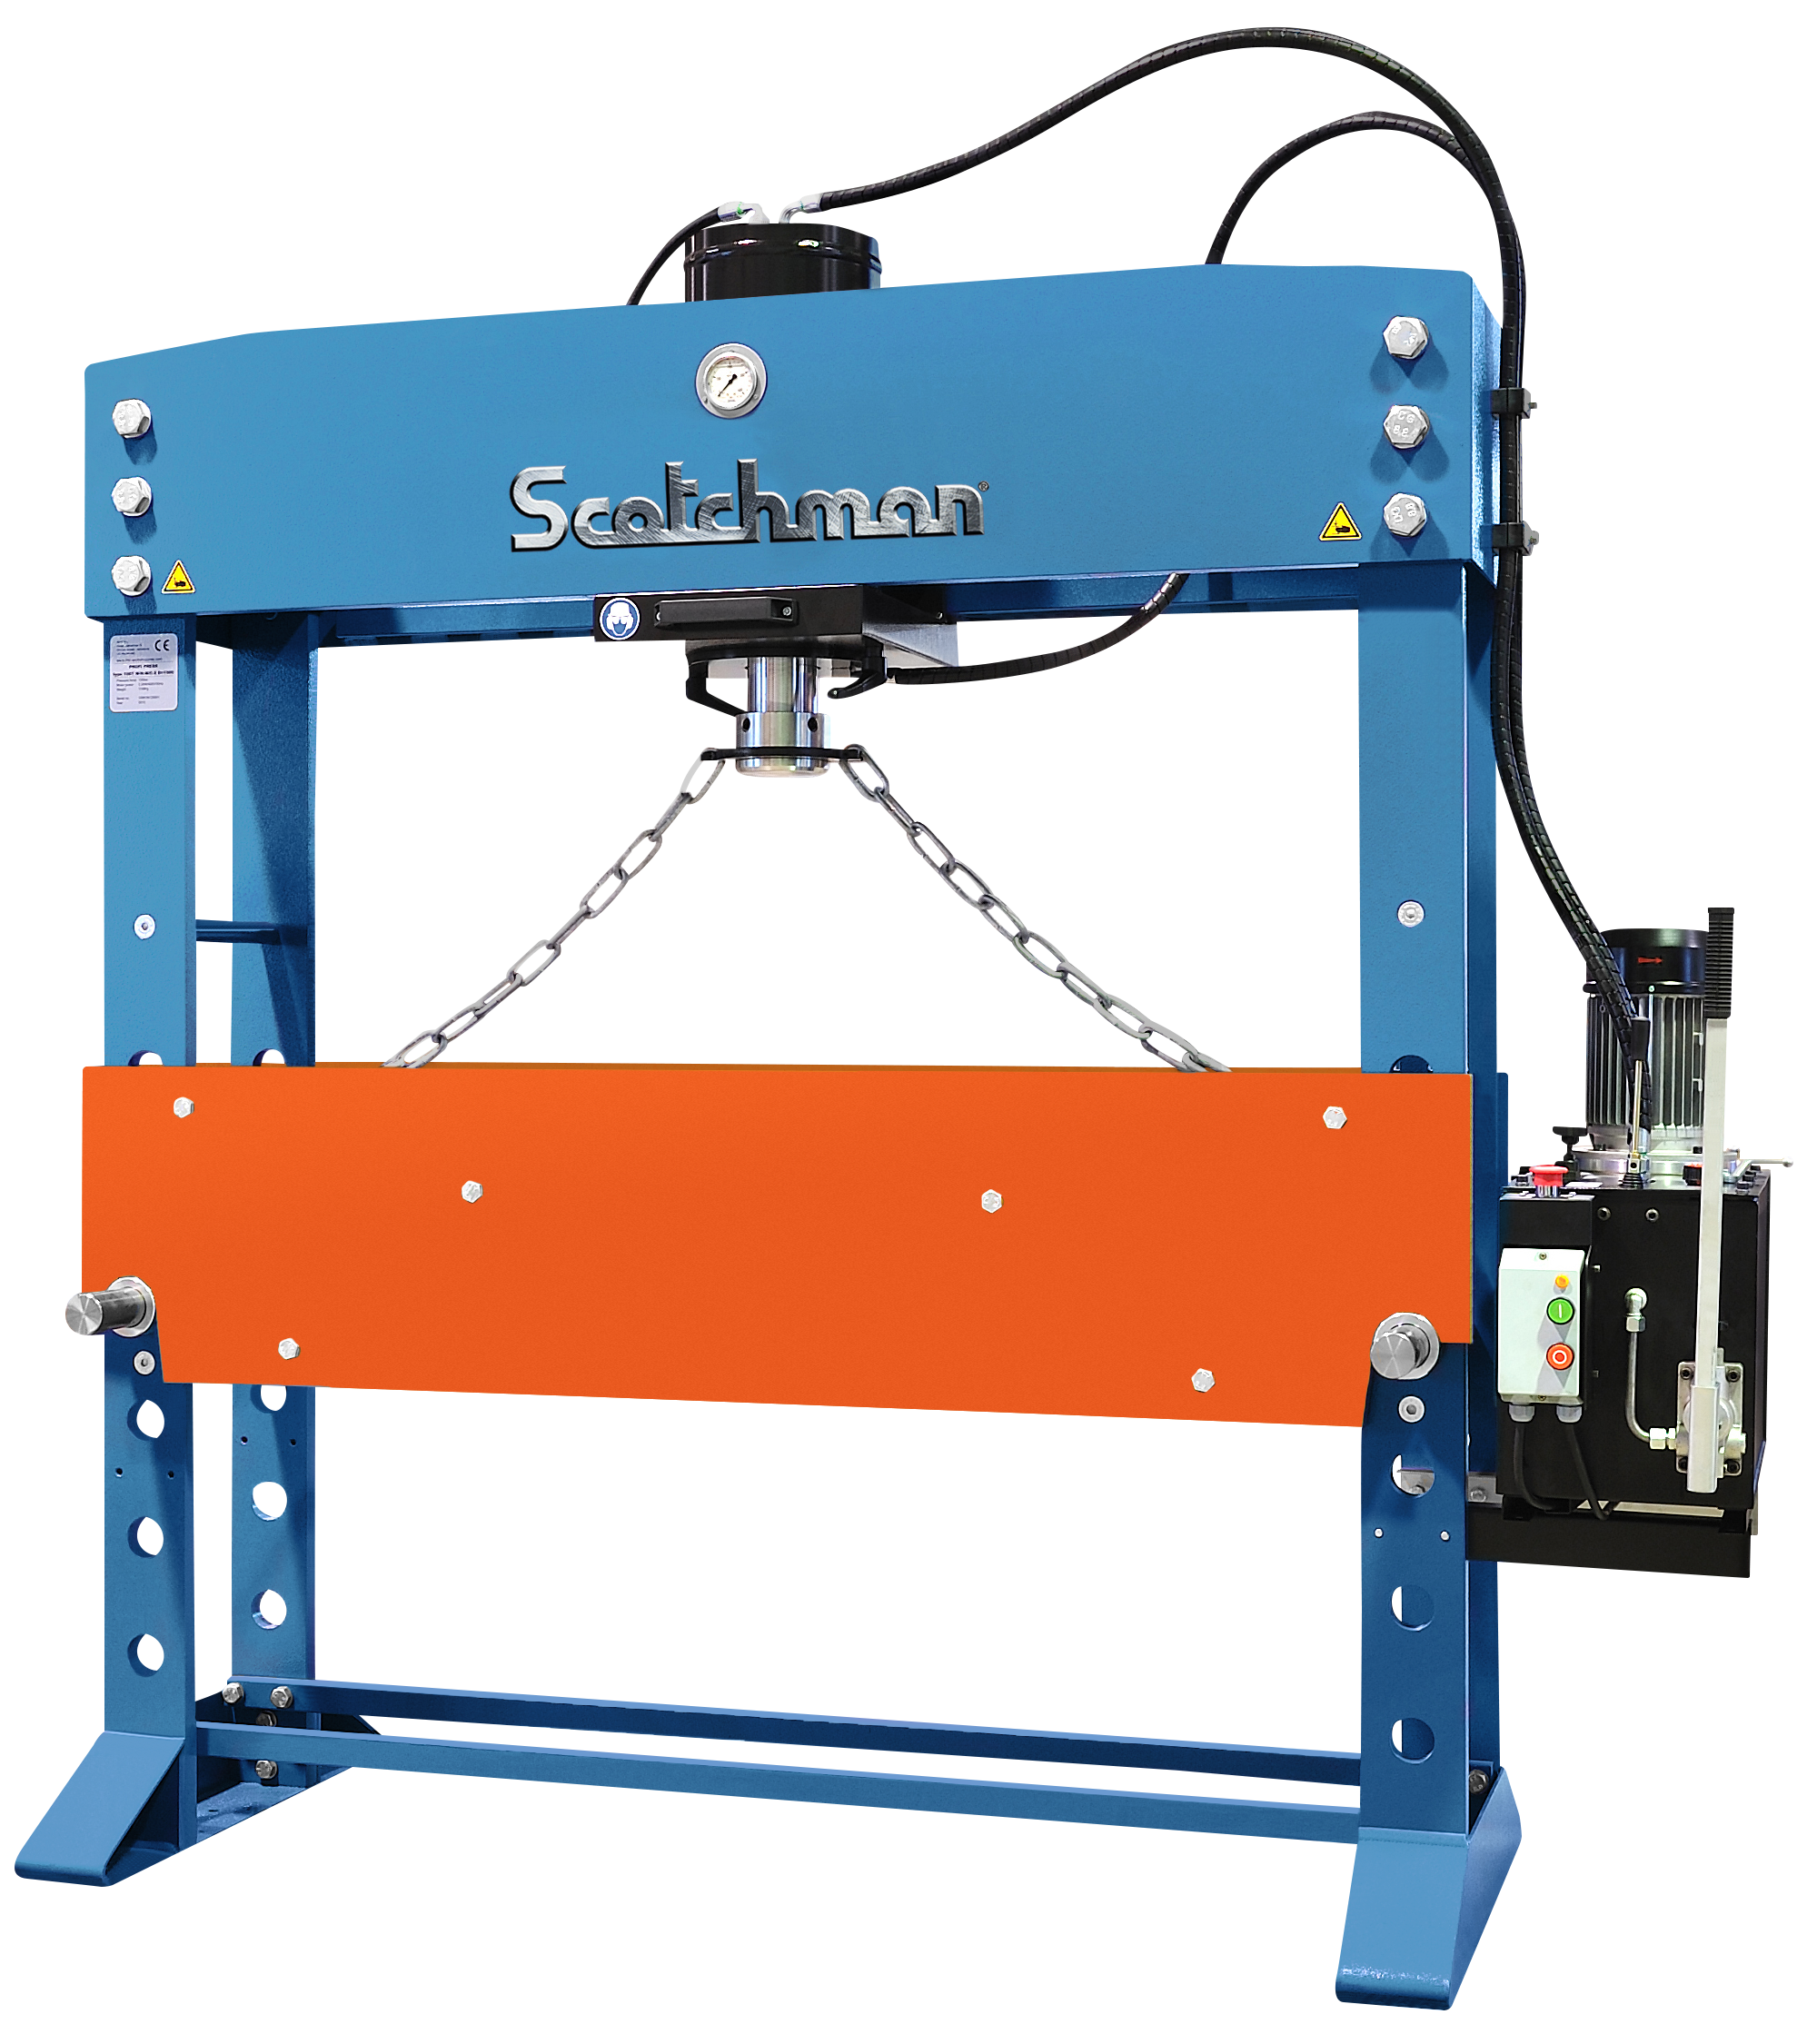 Scotchman Press Pro 176 Ton Hydraulic Press